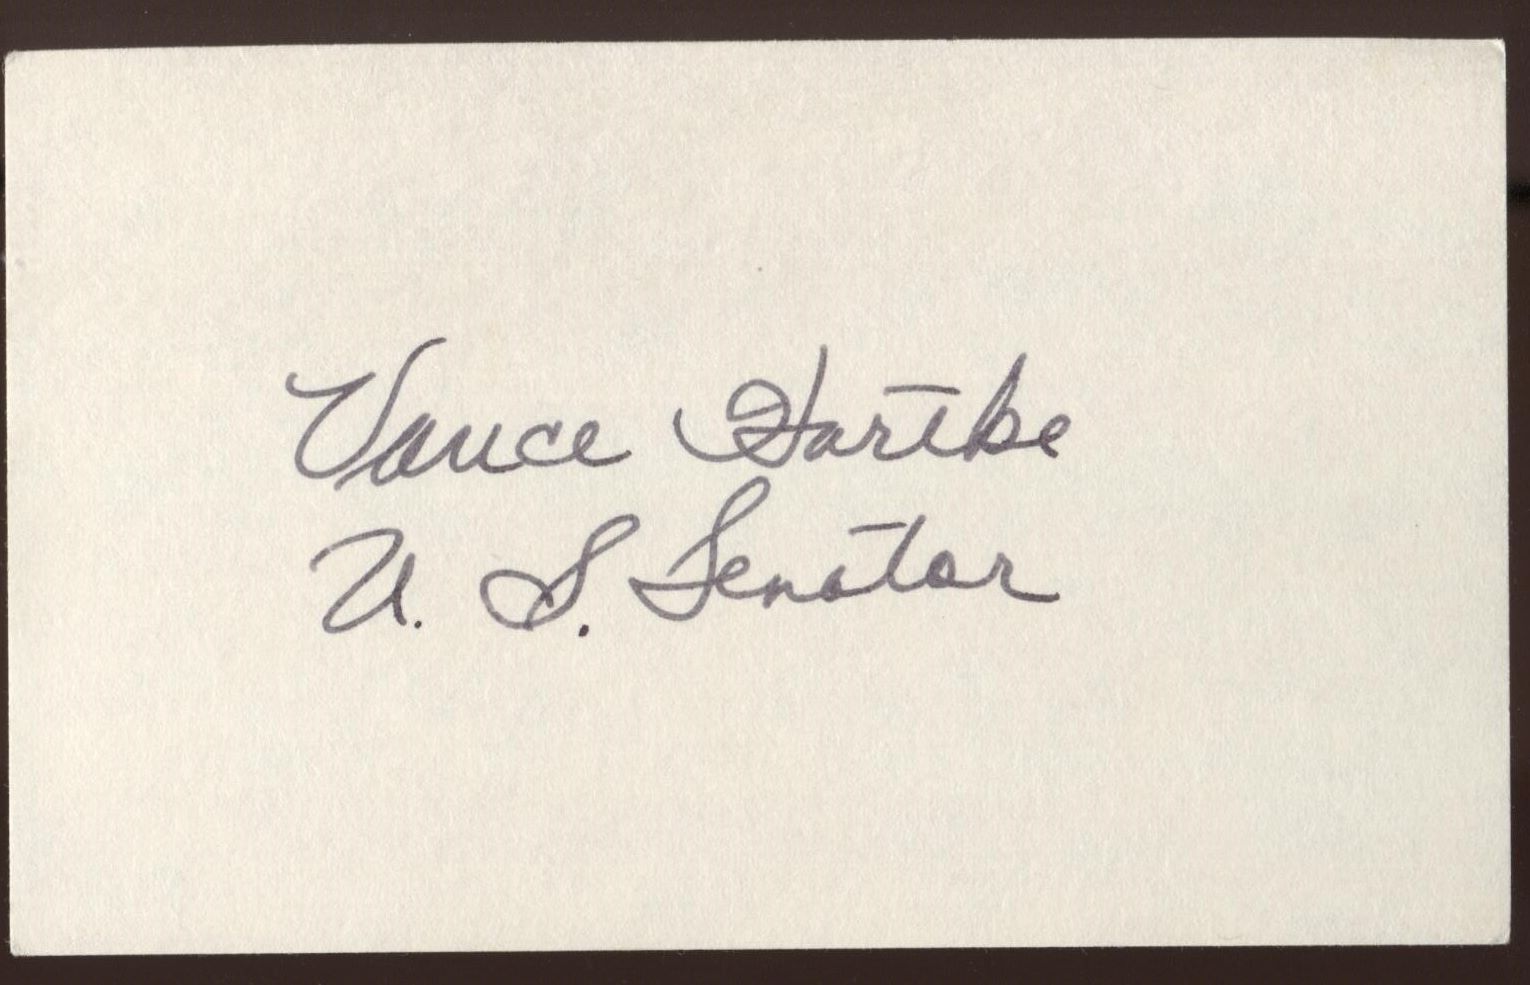 Vance Hartke Signed Index Card Autographed Signature AUTO United States Senator